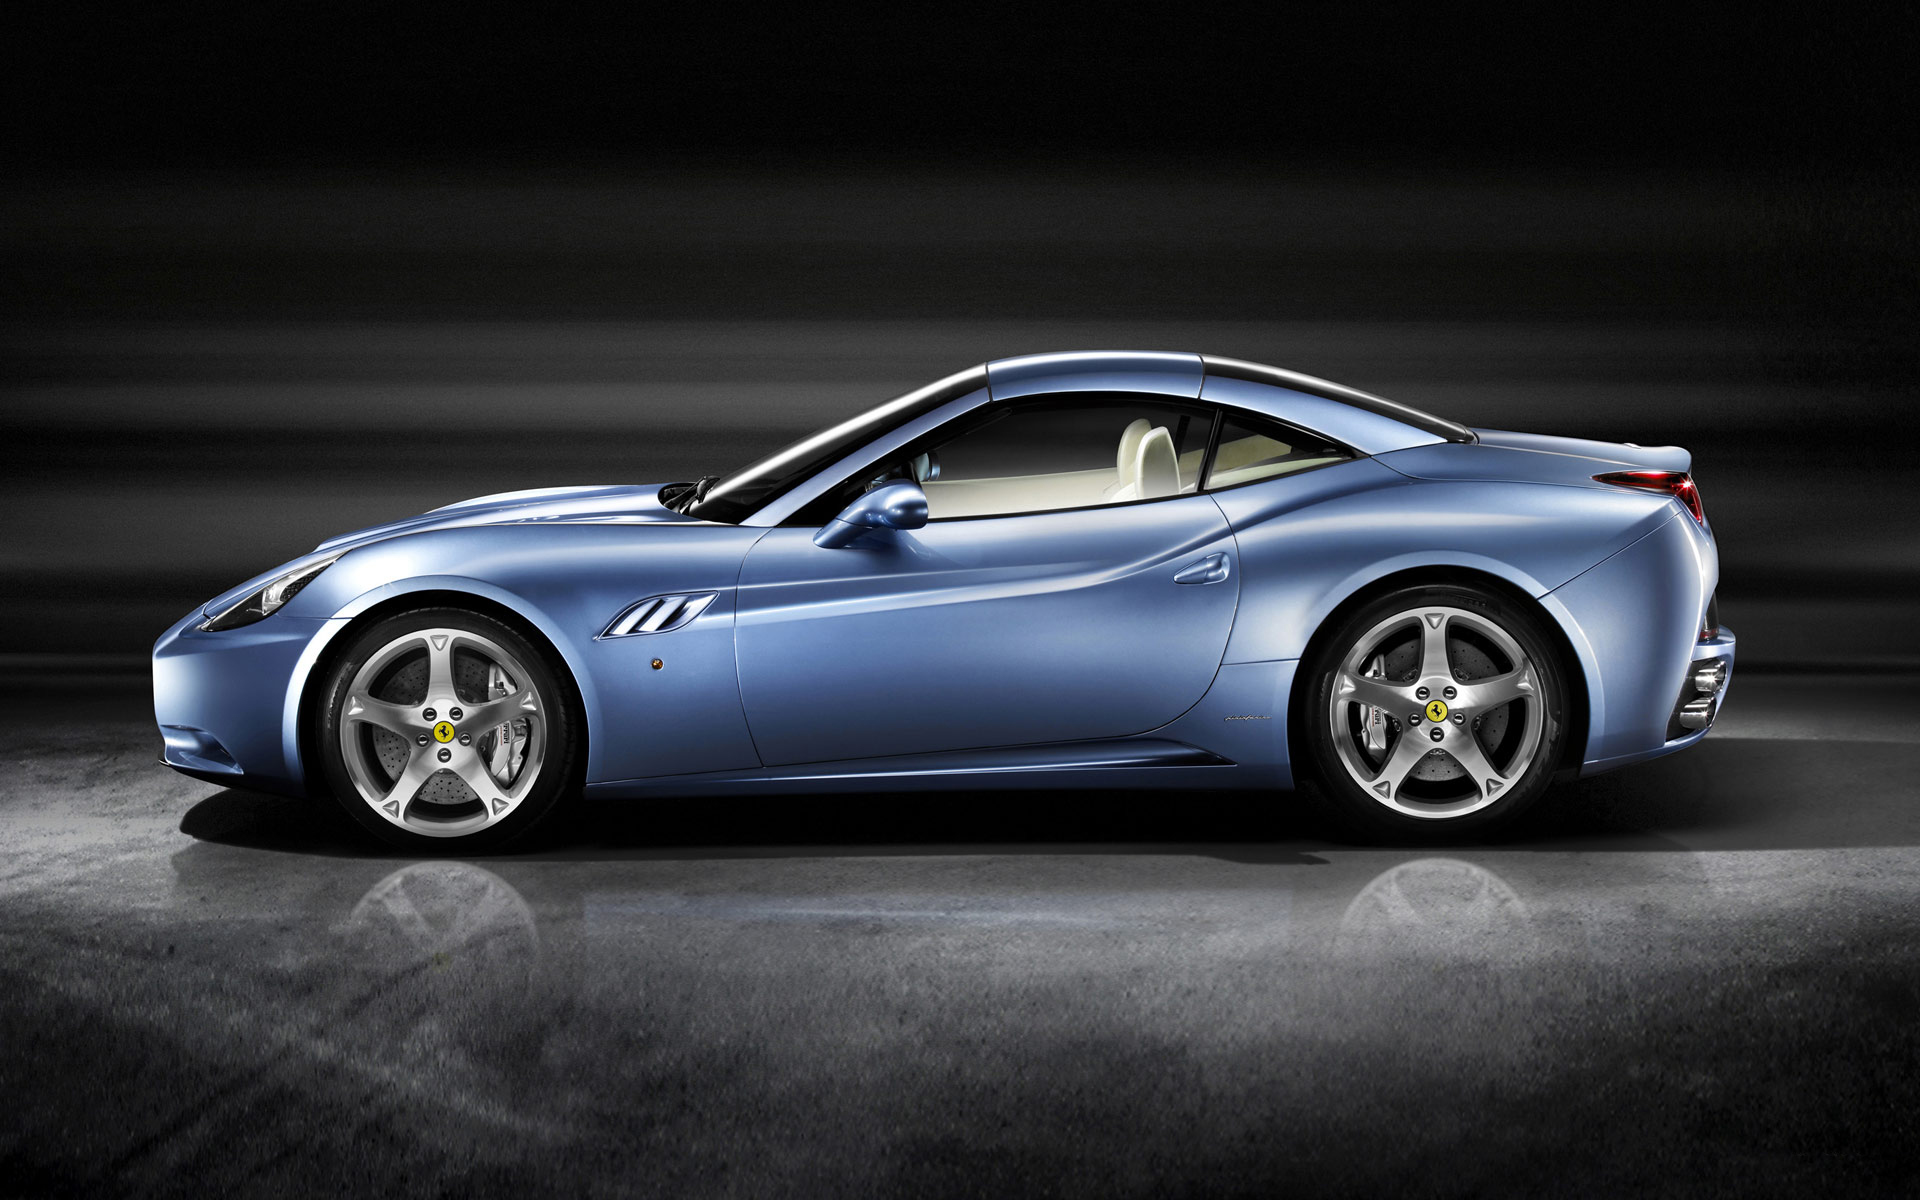 Baixar papel de parede para celular de Ferrari, Carro, Veículo, Veículos gratuito.